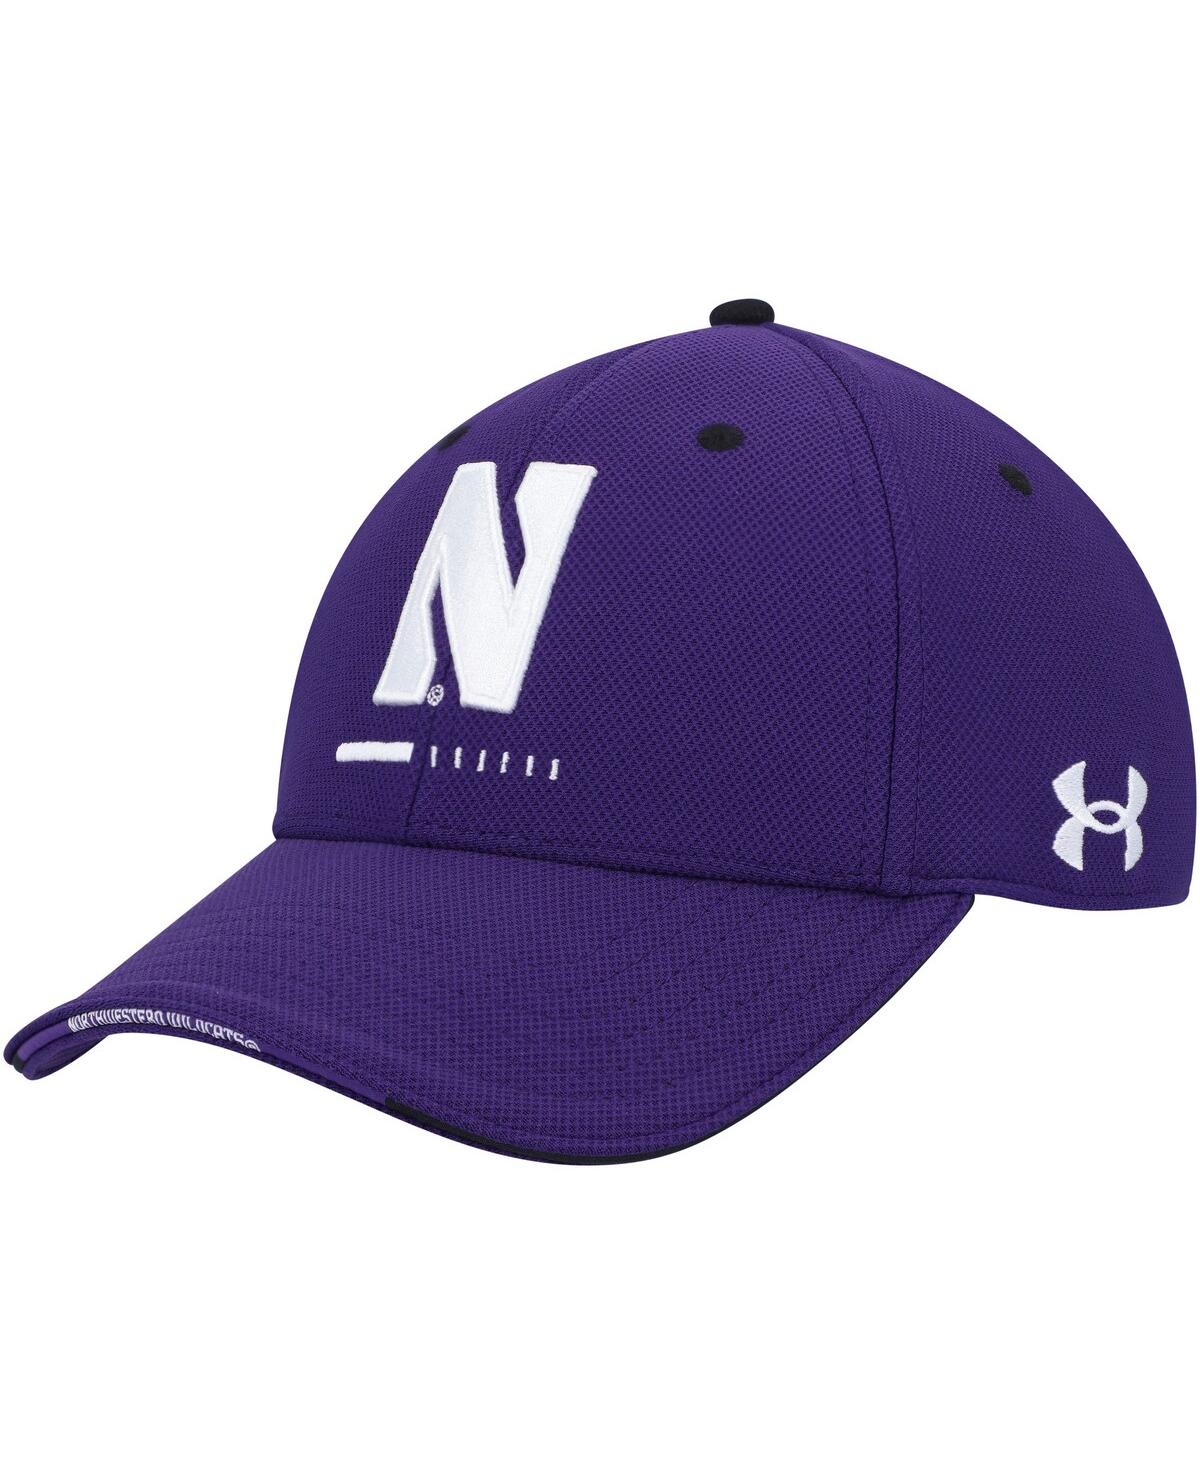 Shop Under Armour Men's  Purple Northwestern Wildcats Blitzing Accent Performance Flex Hat